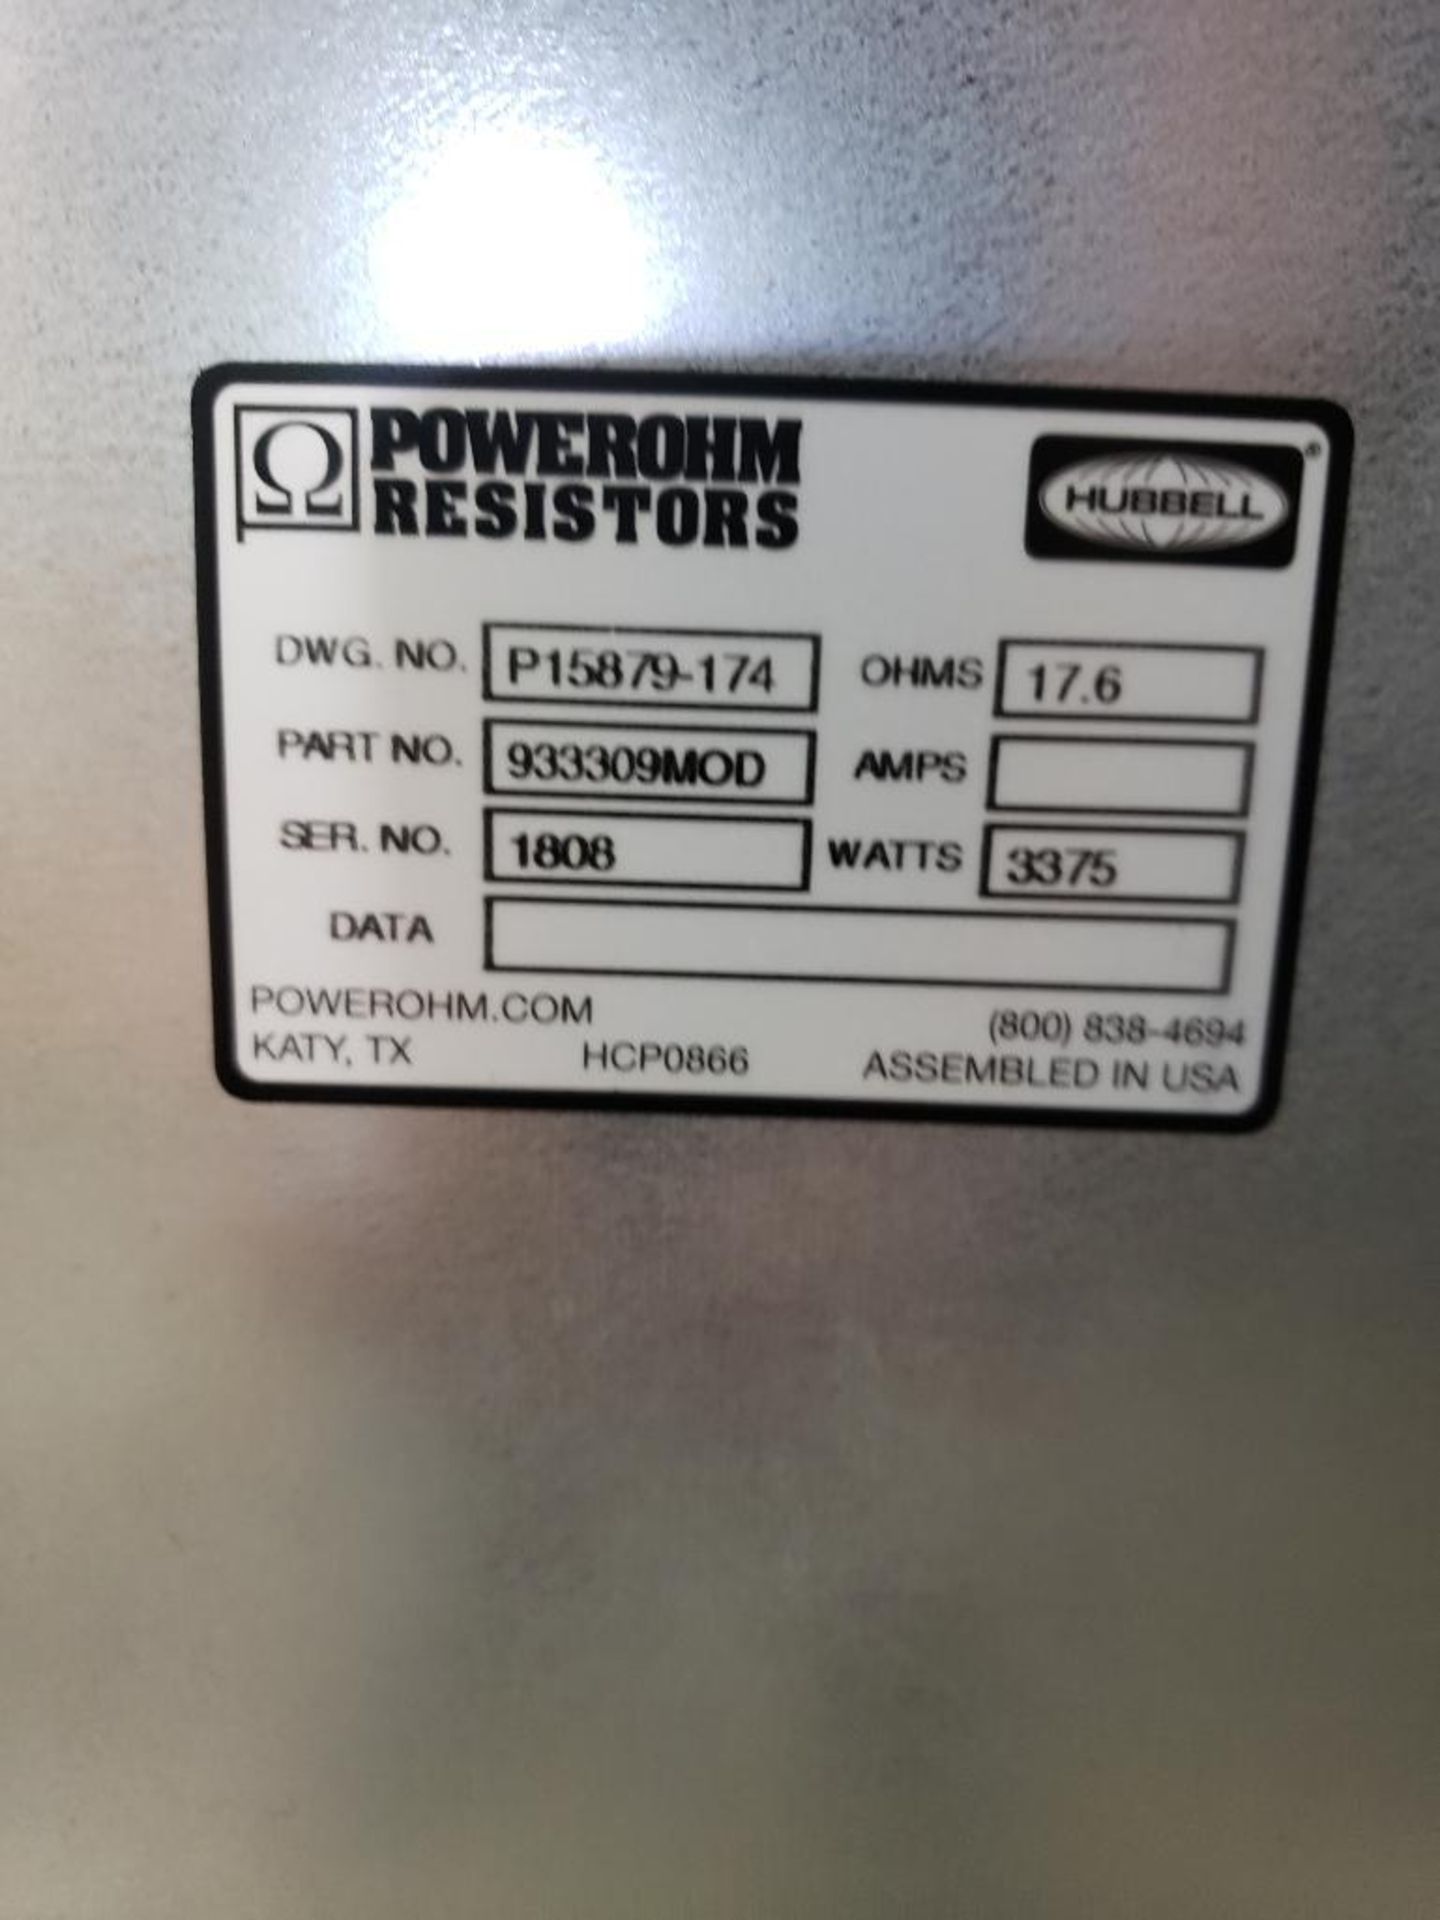 Powerohm Resistors Inc Hubbell 3375 watt brake. 17.5ohm. Part number 933309MOD. New. - Image 2 of 2